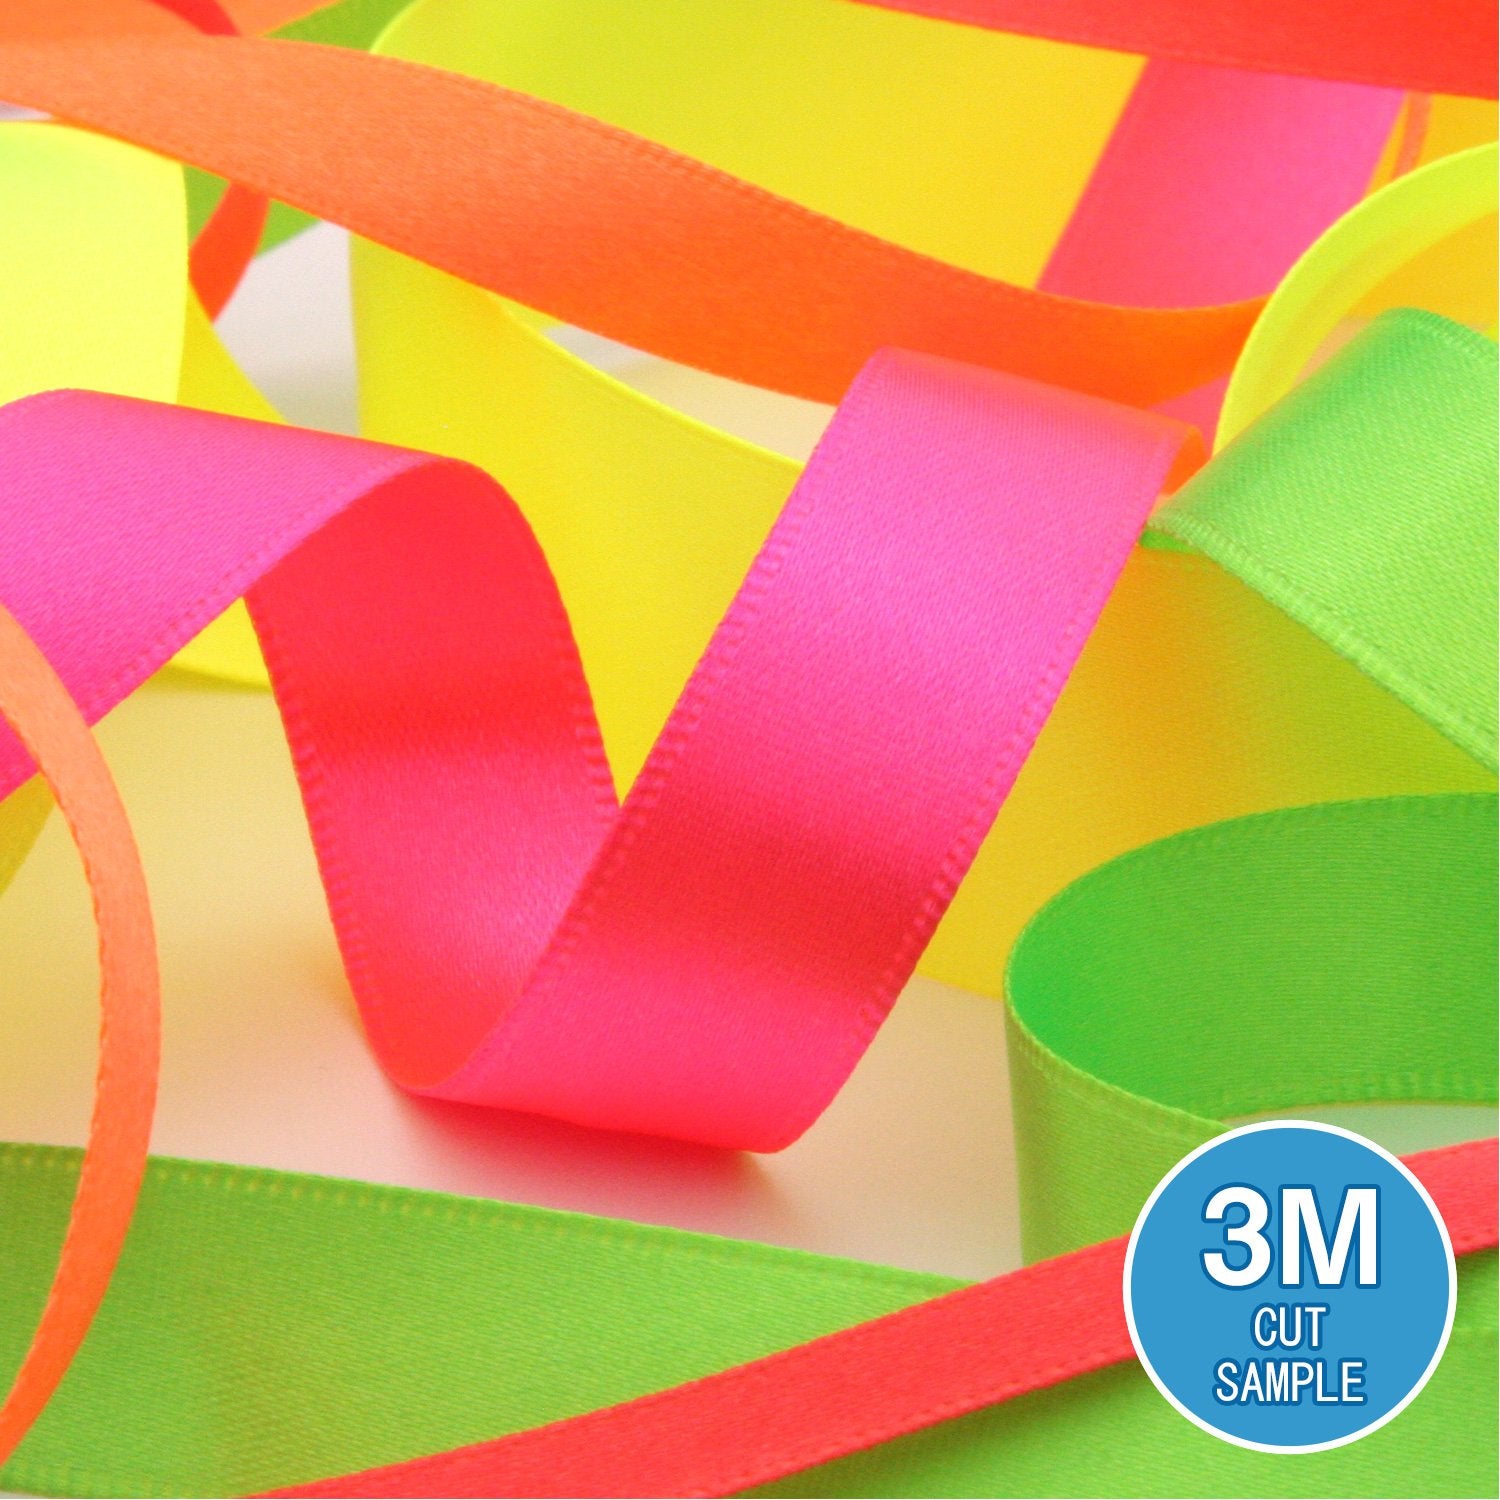 FUJIYAMA RIBBON [Sample] Polyester Double-Face Satin Ribbon (FY-242F) 3mm 3 Meters Cut